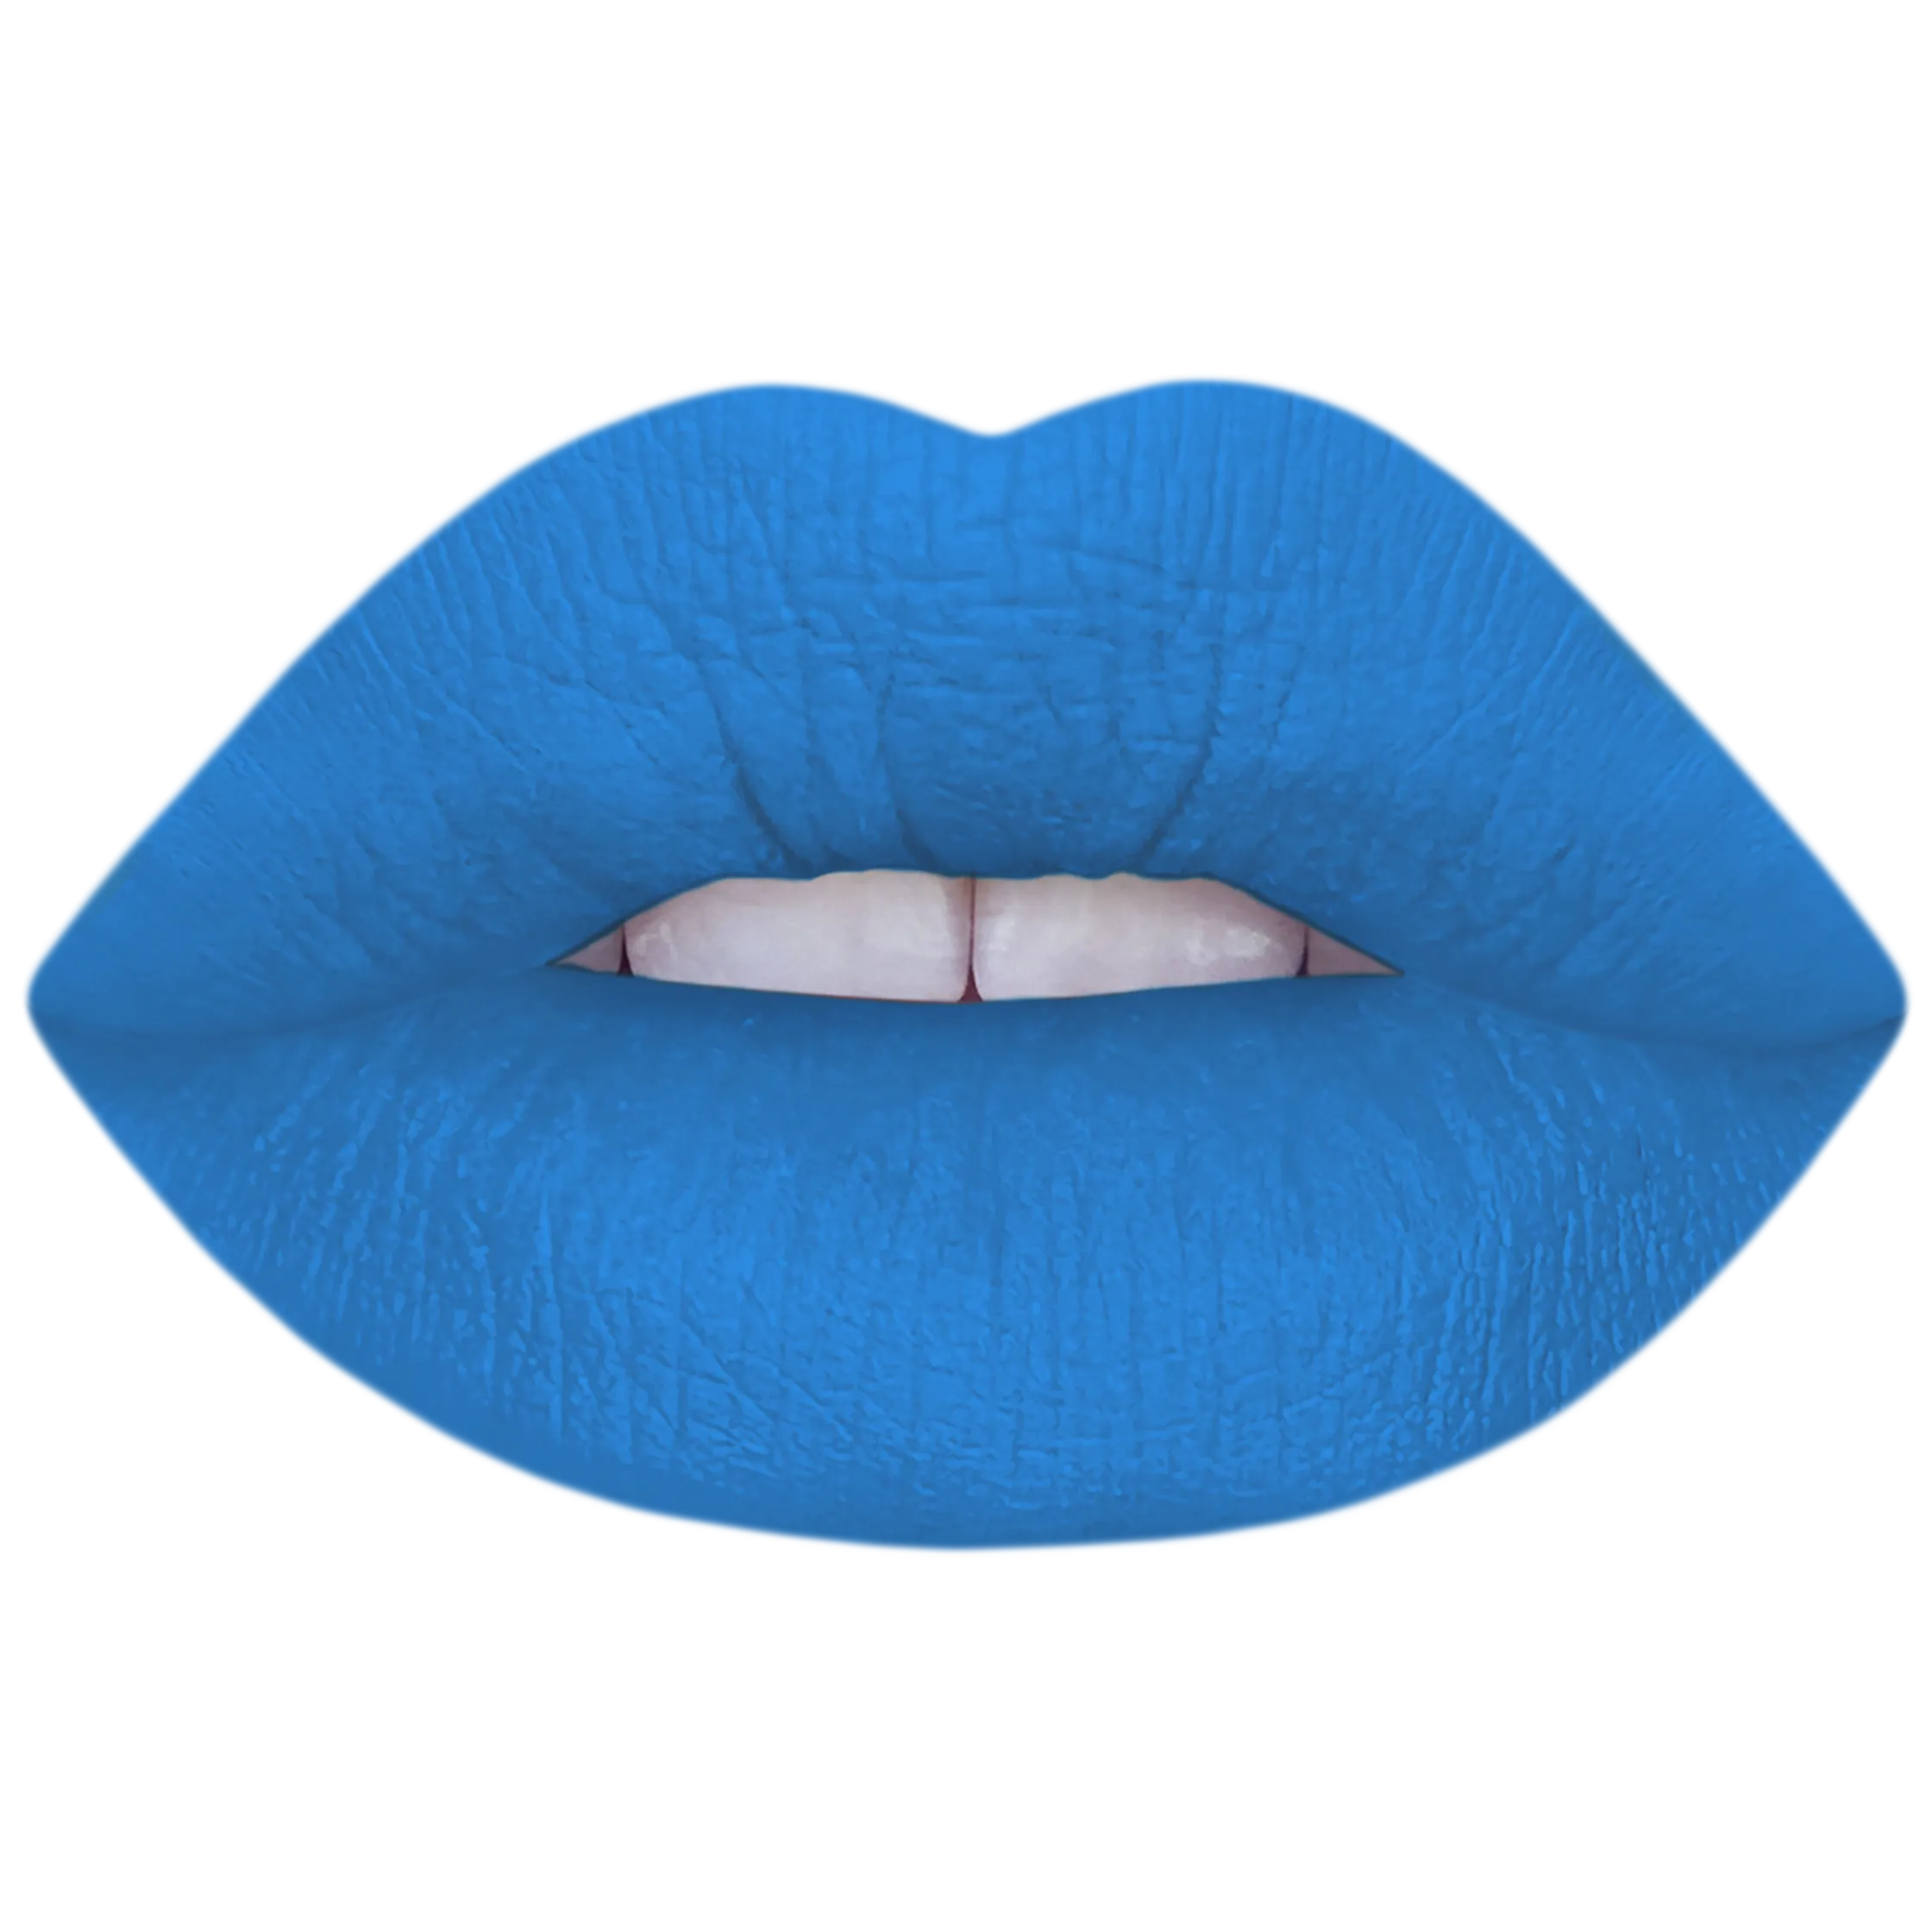 Soft Touch Lipstick variant:Cloud 9